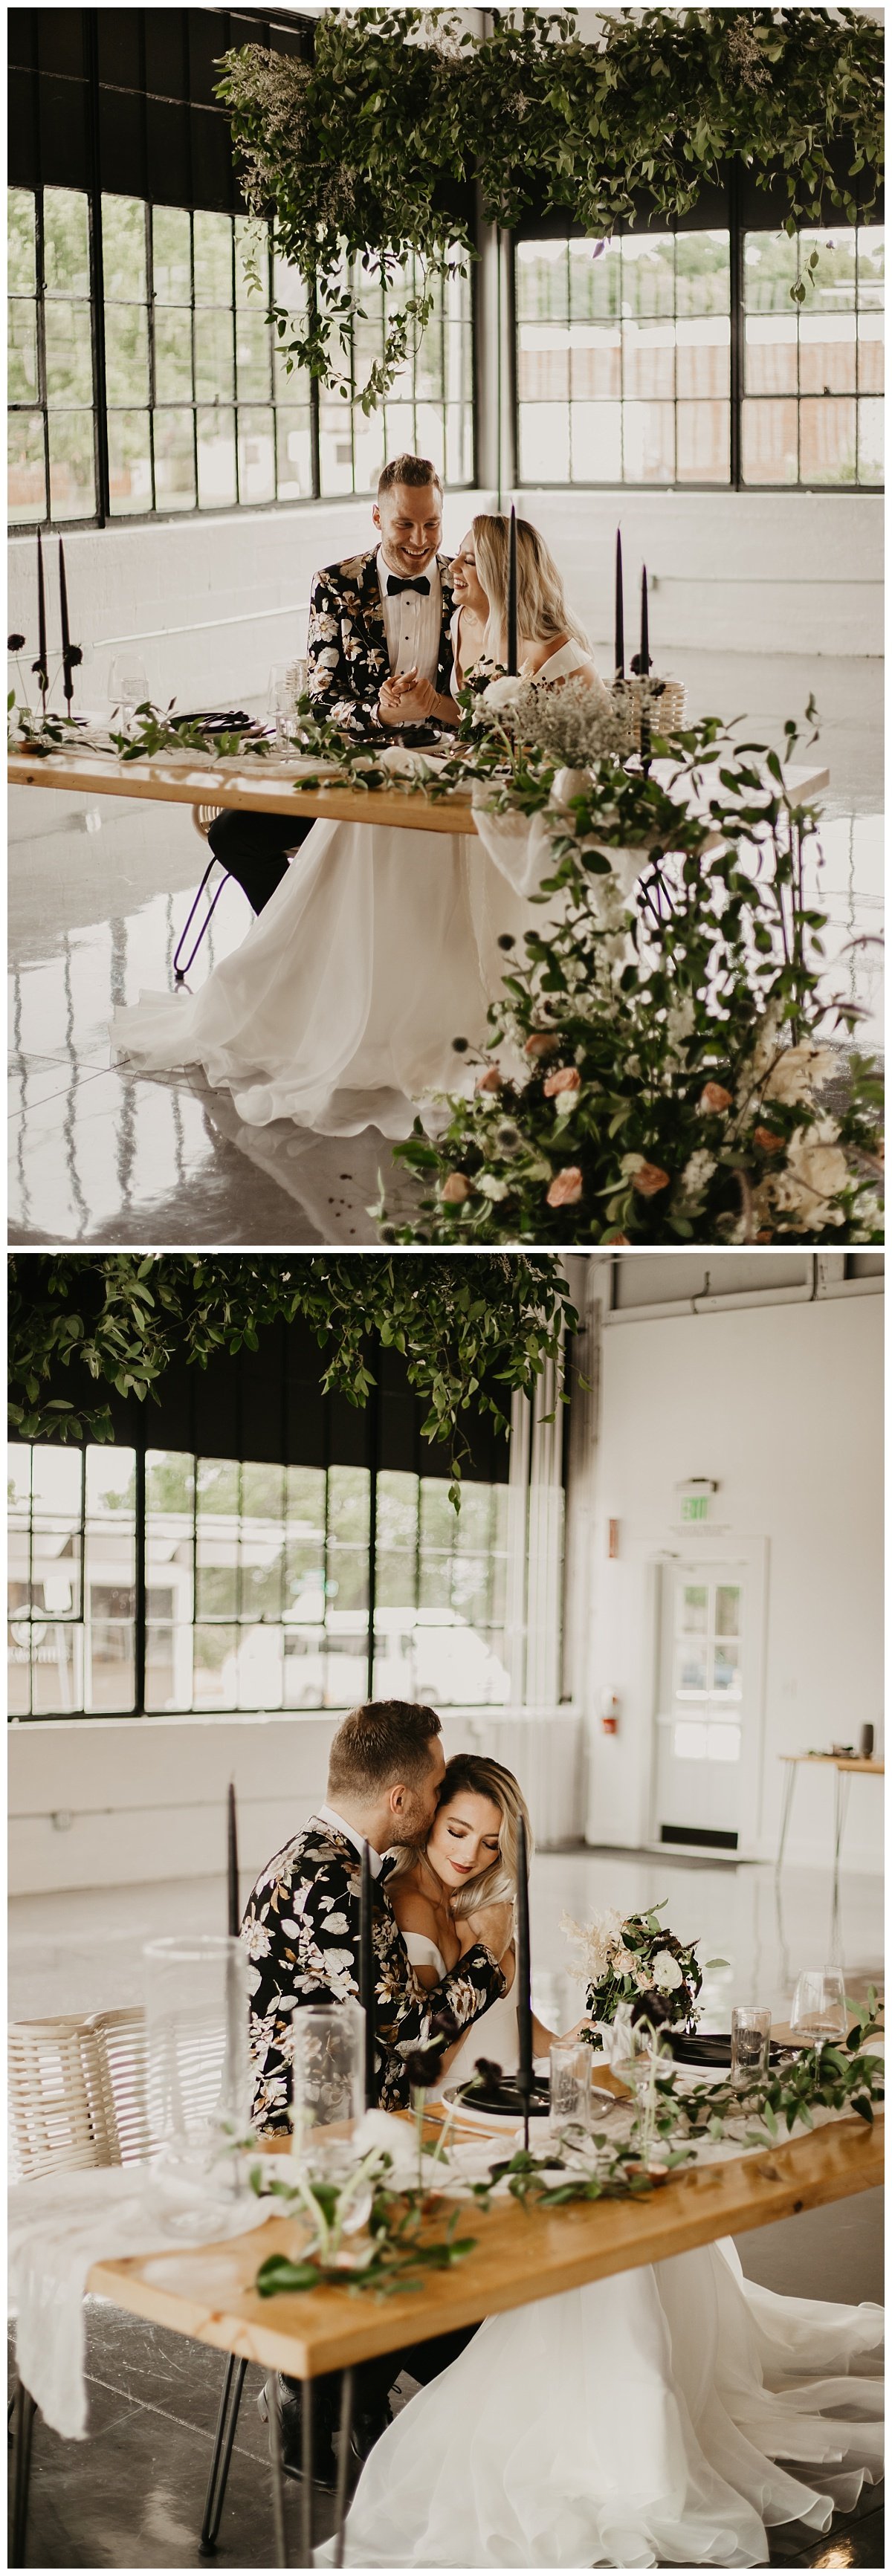 Urban+Wedding+_+Kansas+City+Wedding+Photographer+_+City+Wedding+_+Minimalist+Wedding (9).jpeg